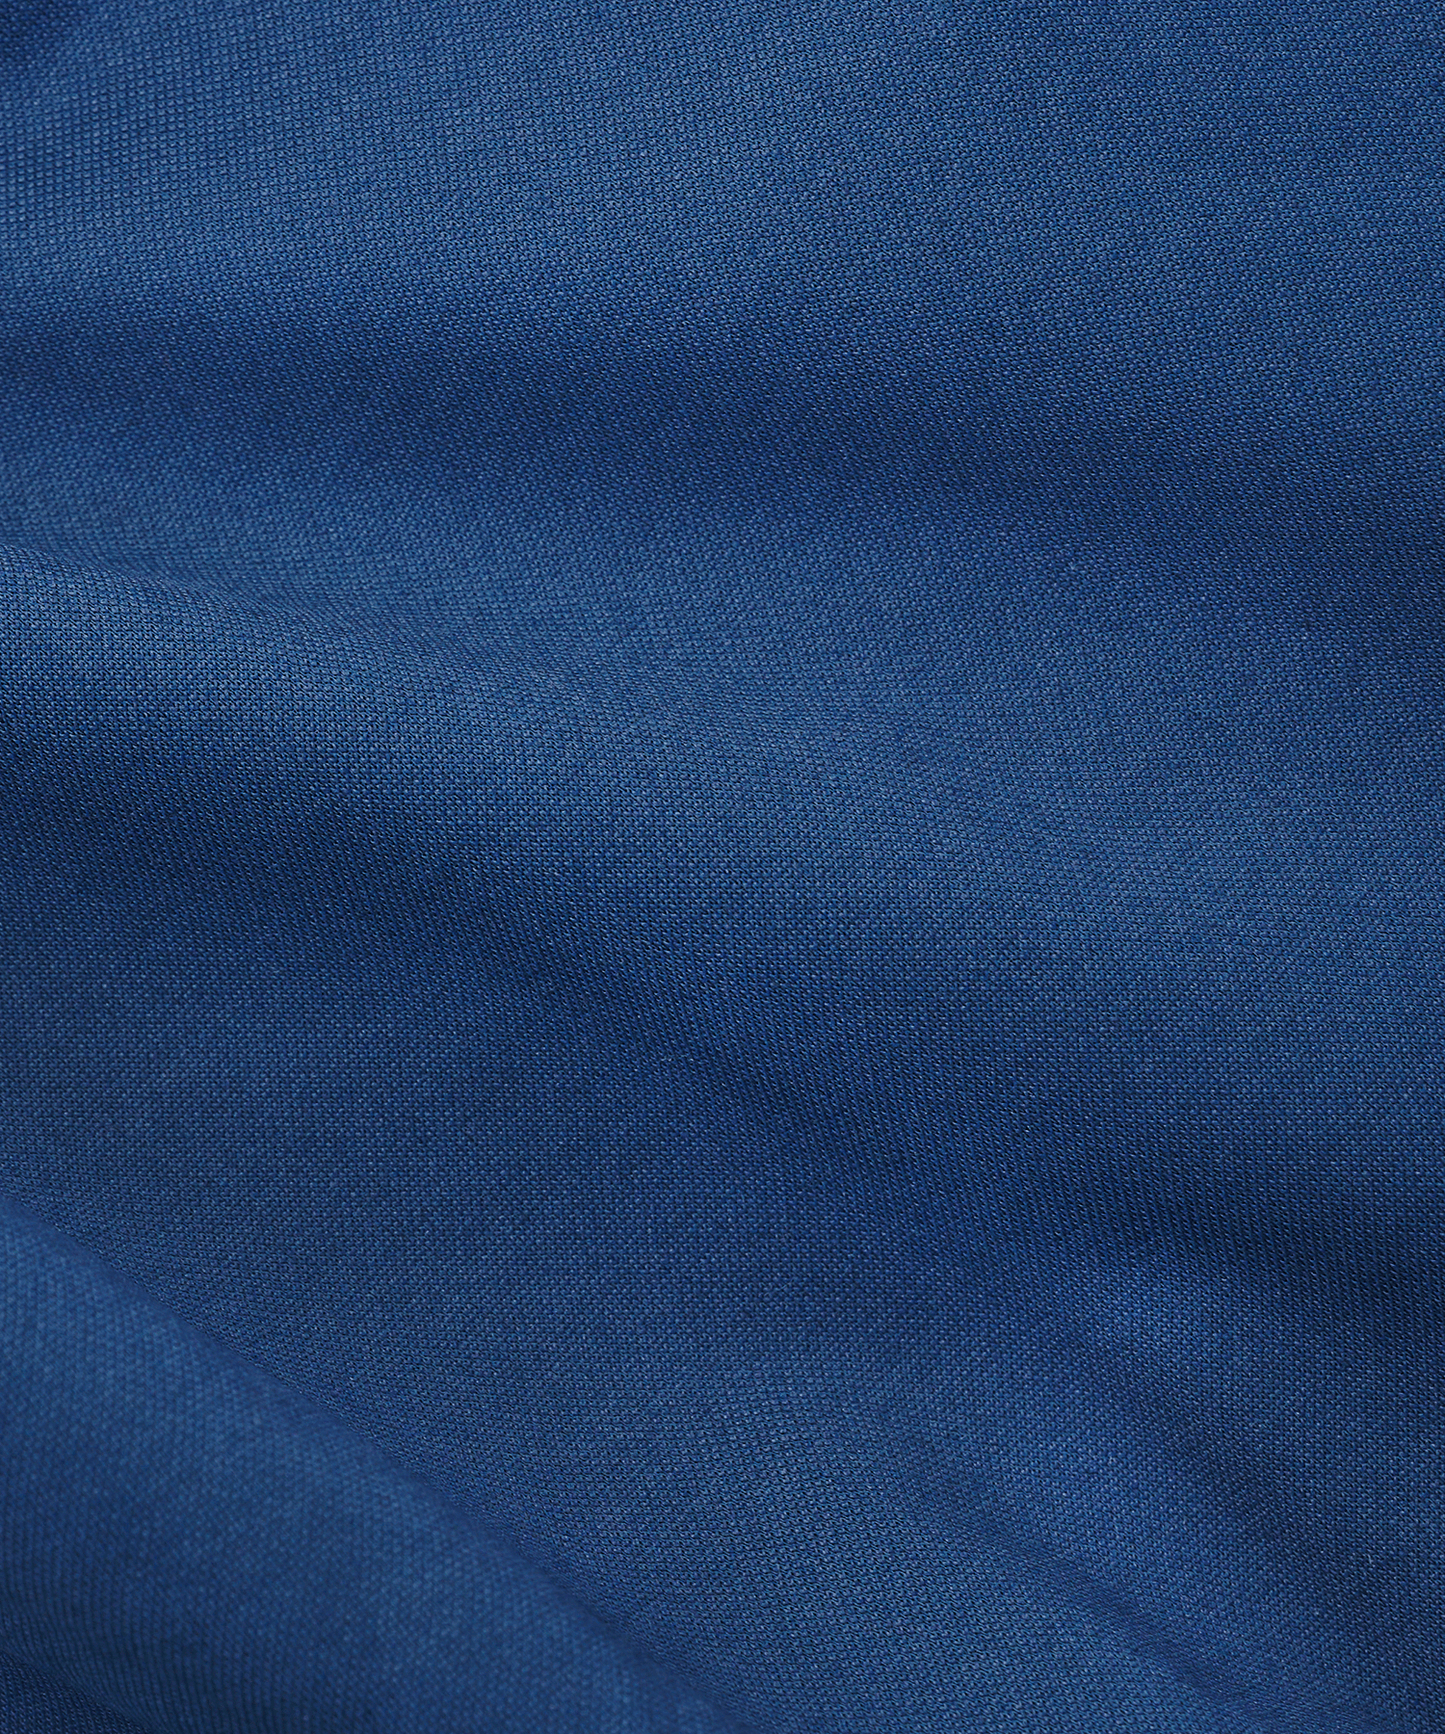 Profuomo Japanese knitted overhemd katoen blauw - The Society Shop